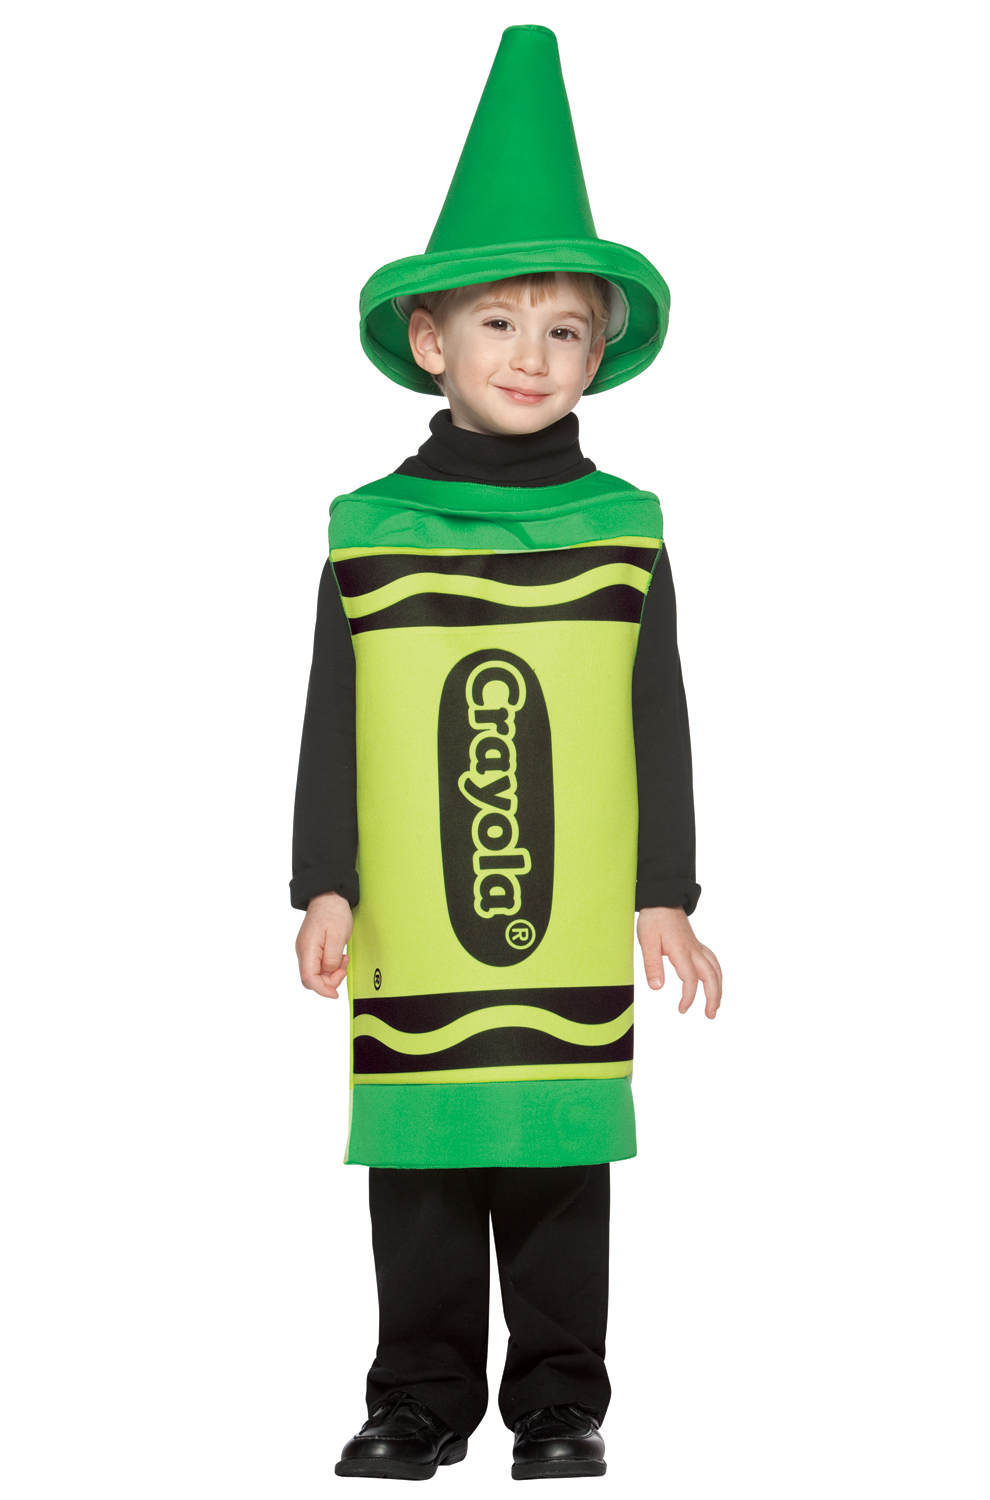 Rasta Imposta Child's Classic Green Crayola Crayon Costume Toddler 4T - image 2 of 2